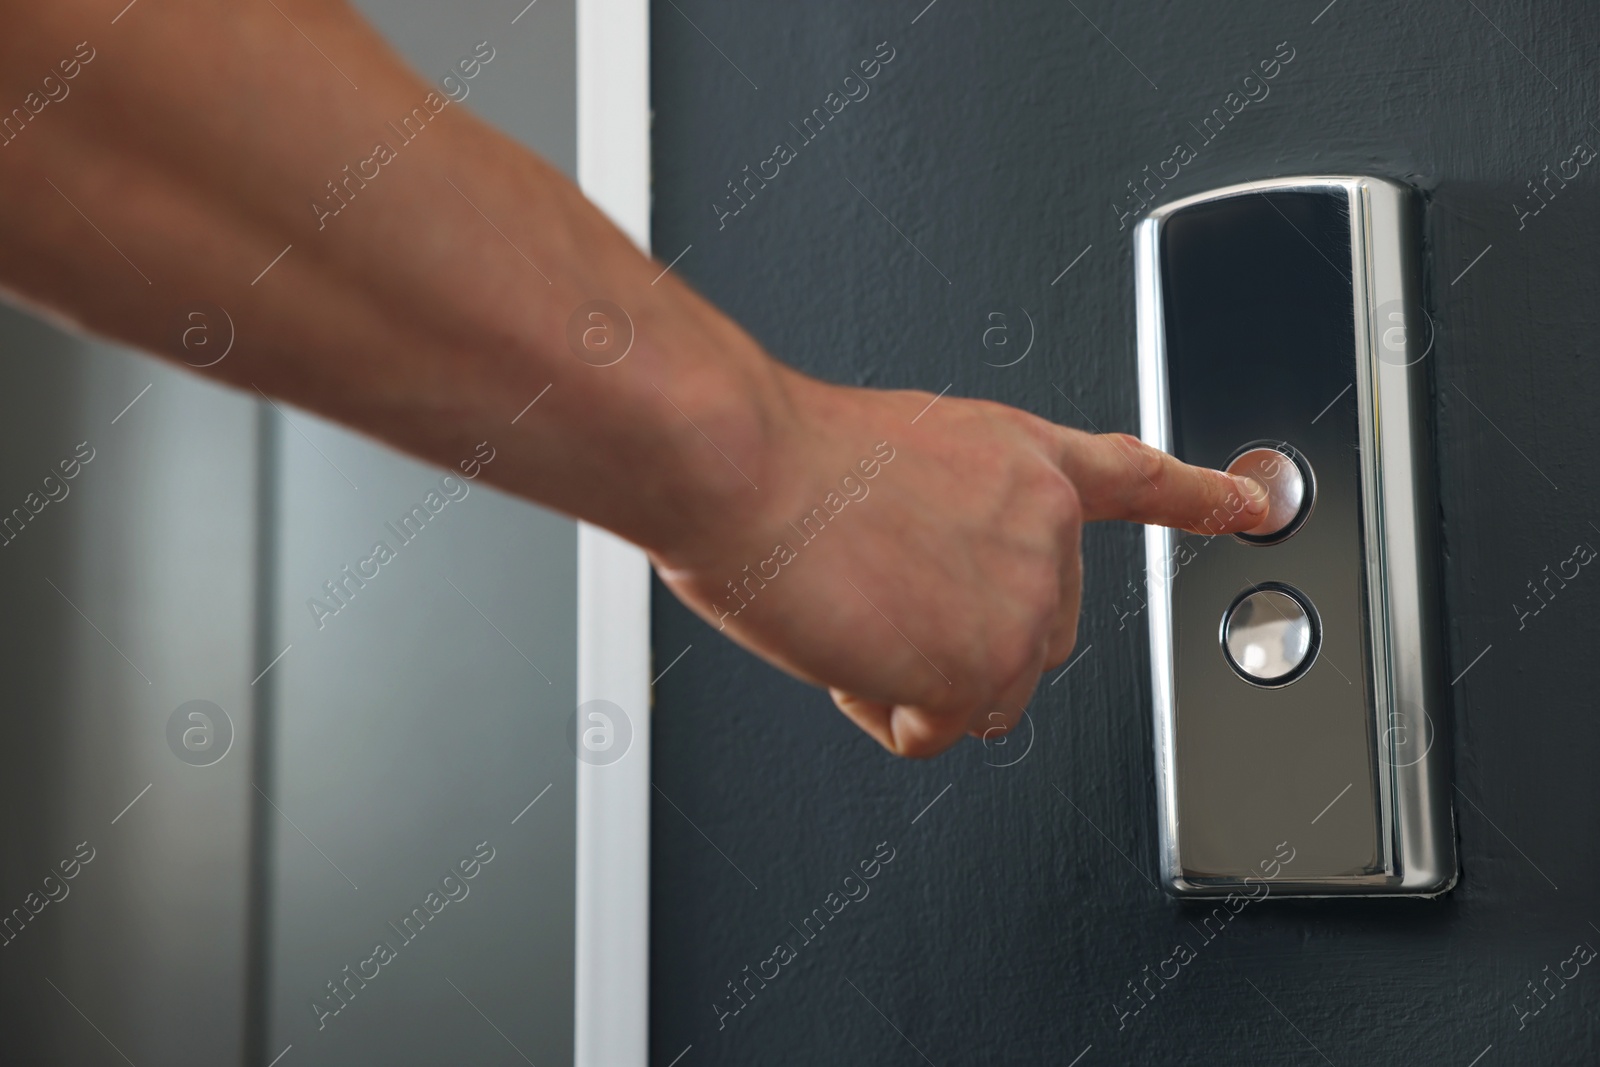 Photo of Man pressing elevator call button, closeup view